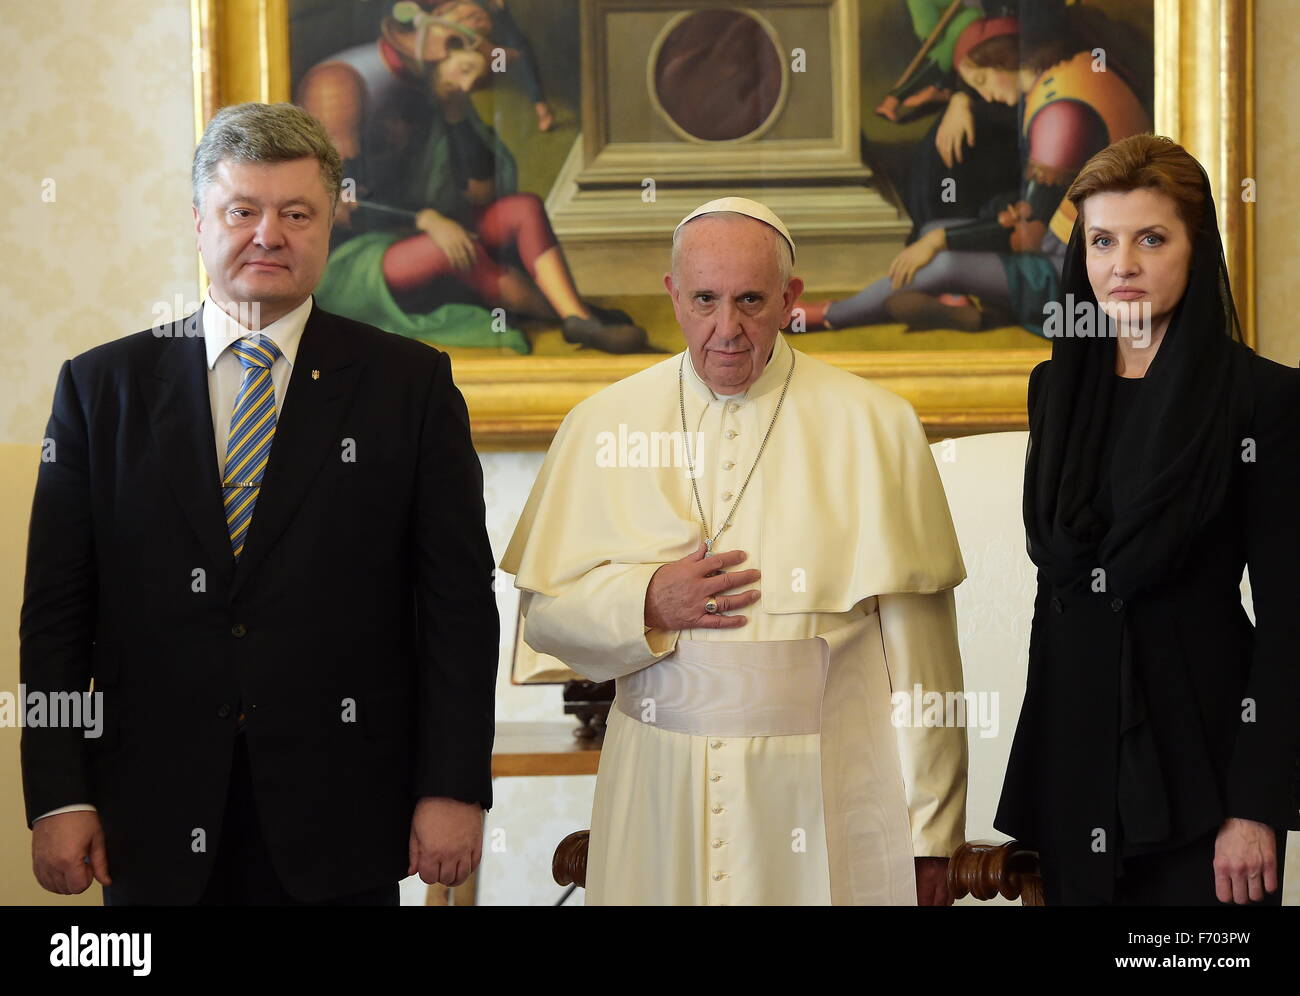 president-of-ukraine-petro-poroschenko-with-pope-francis-and-wife-F703PW.jpg